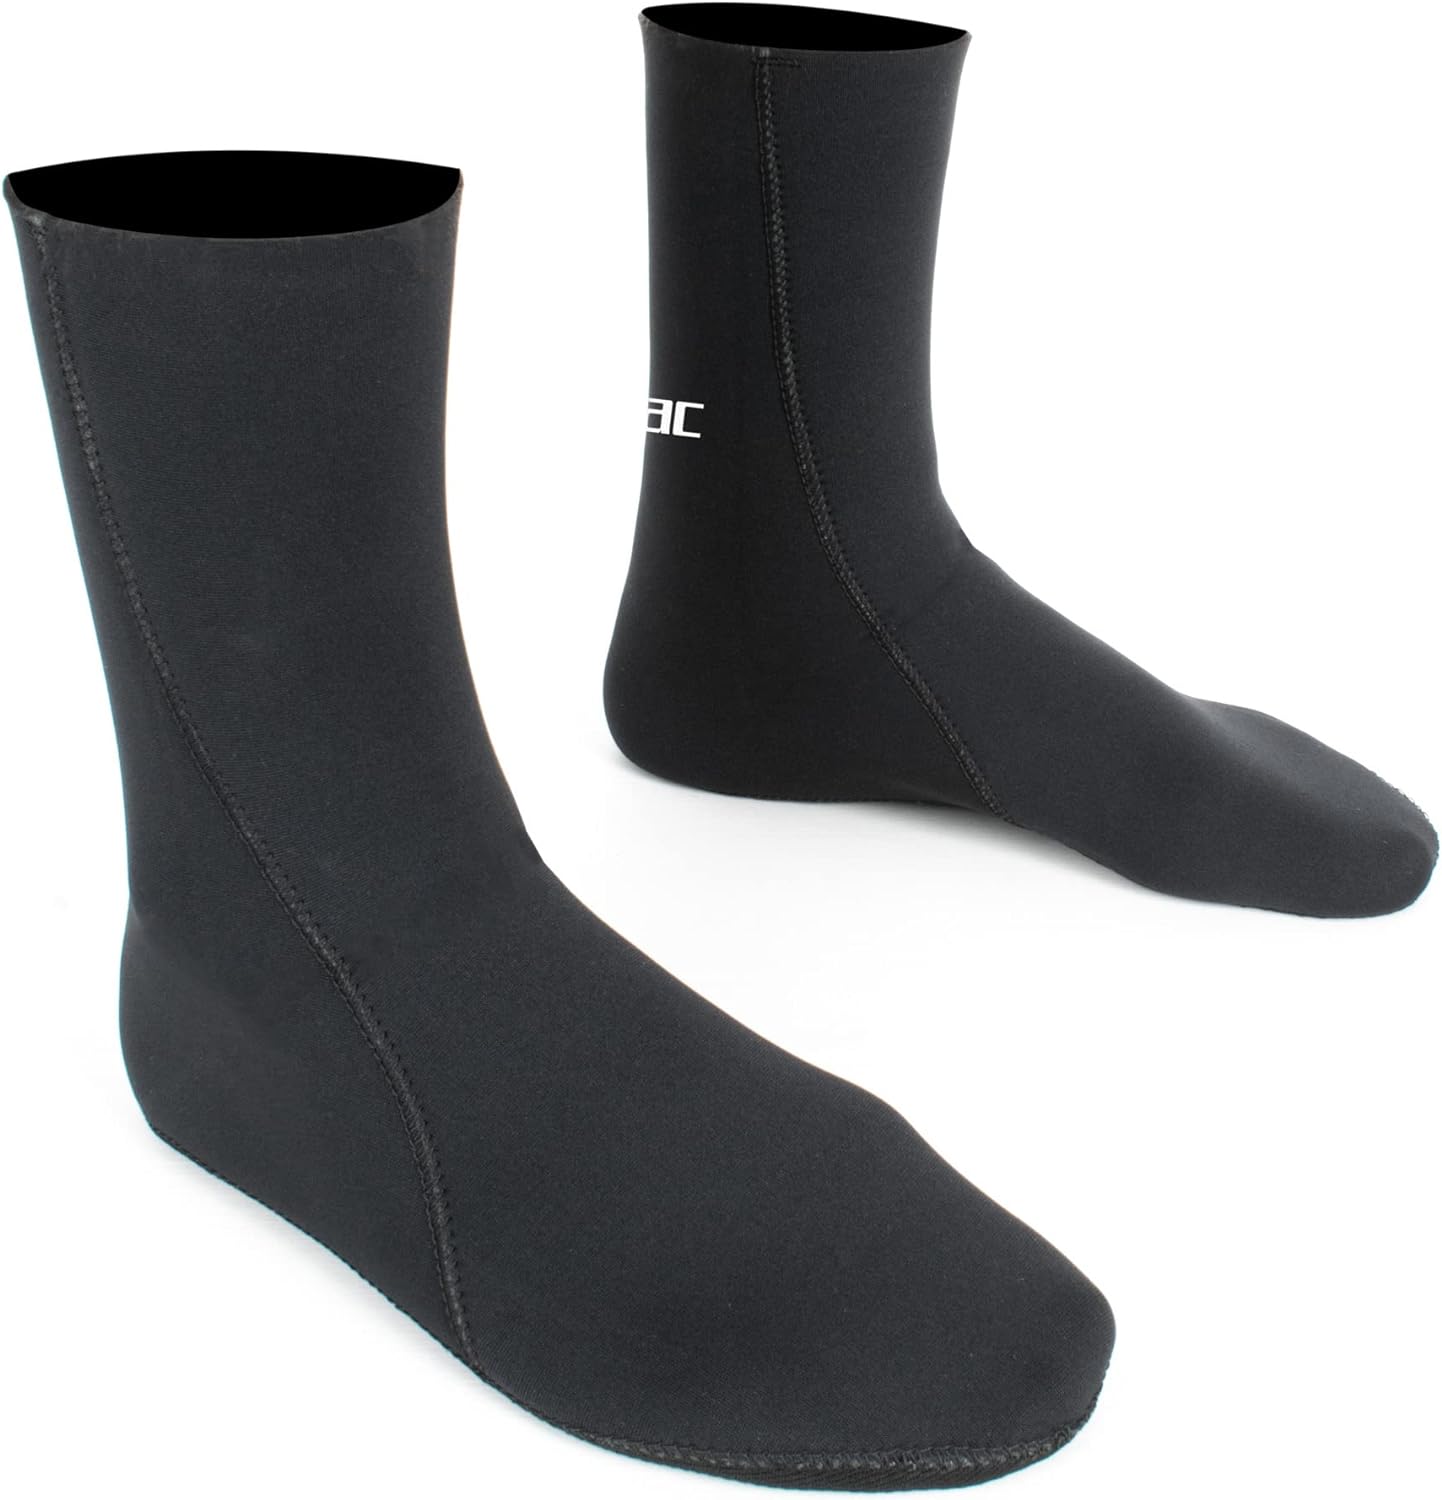 Seac Standard 2.5 mm Thick Neoprene Socks - Sons Of Triton